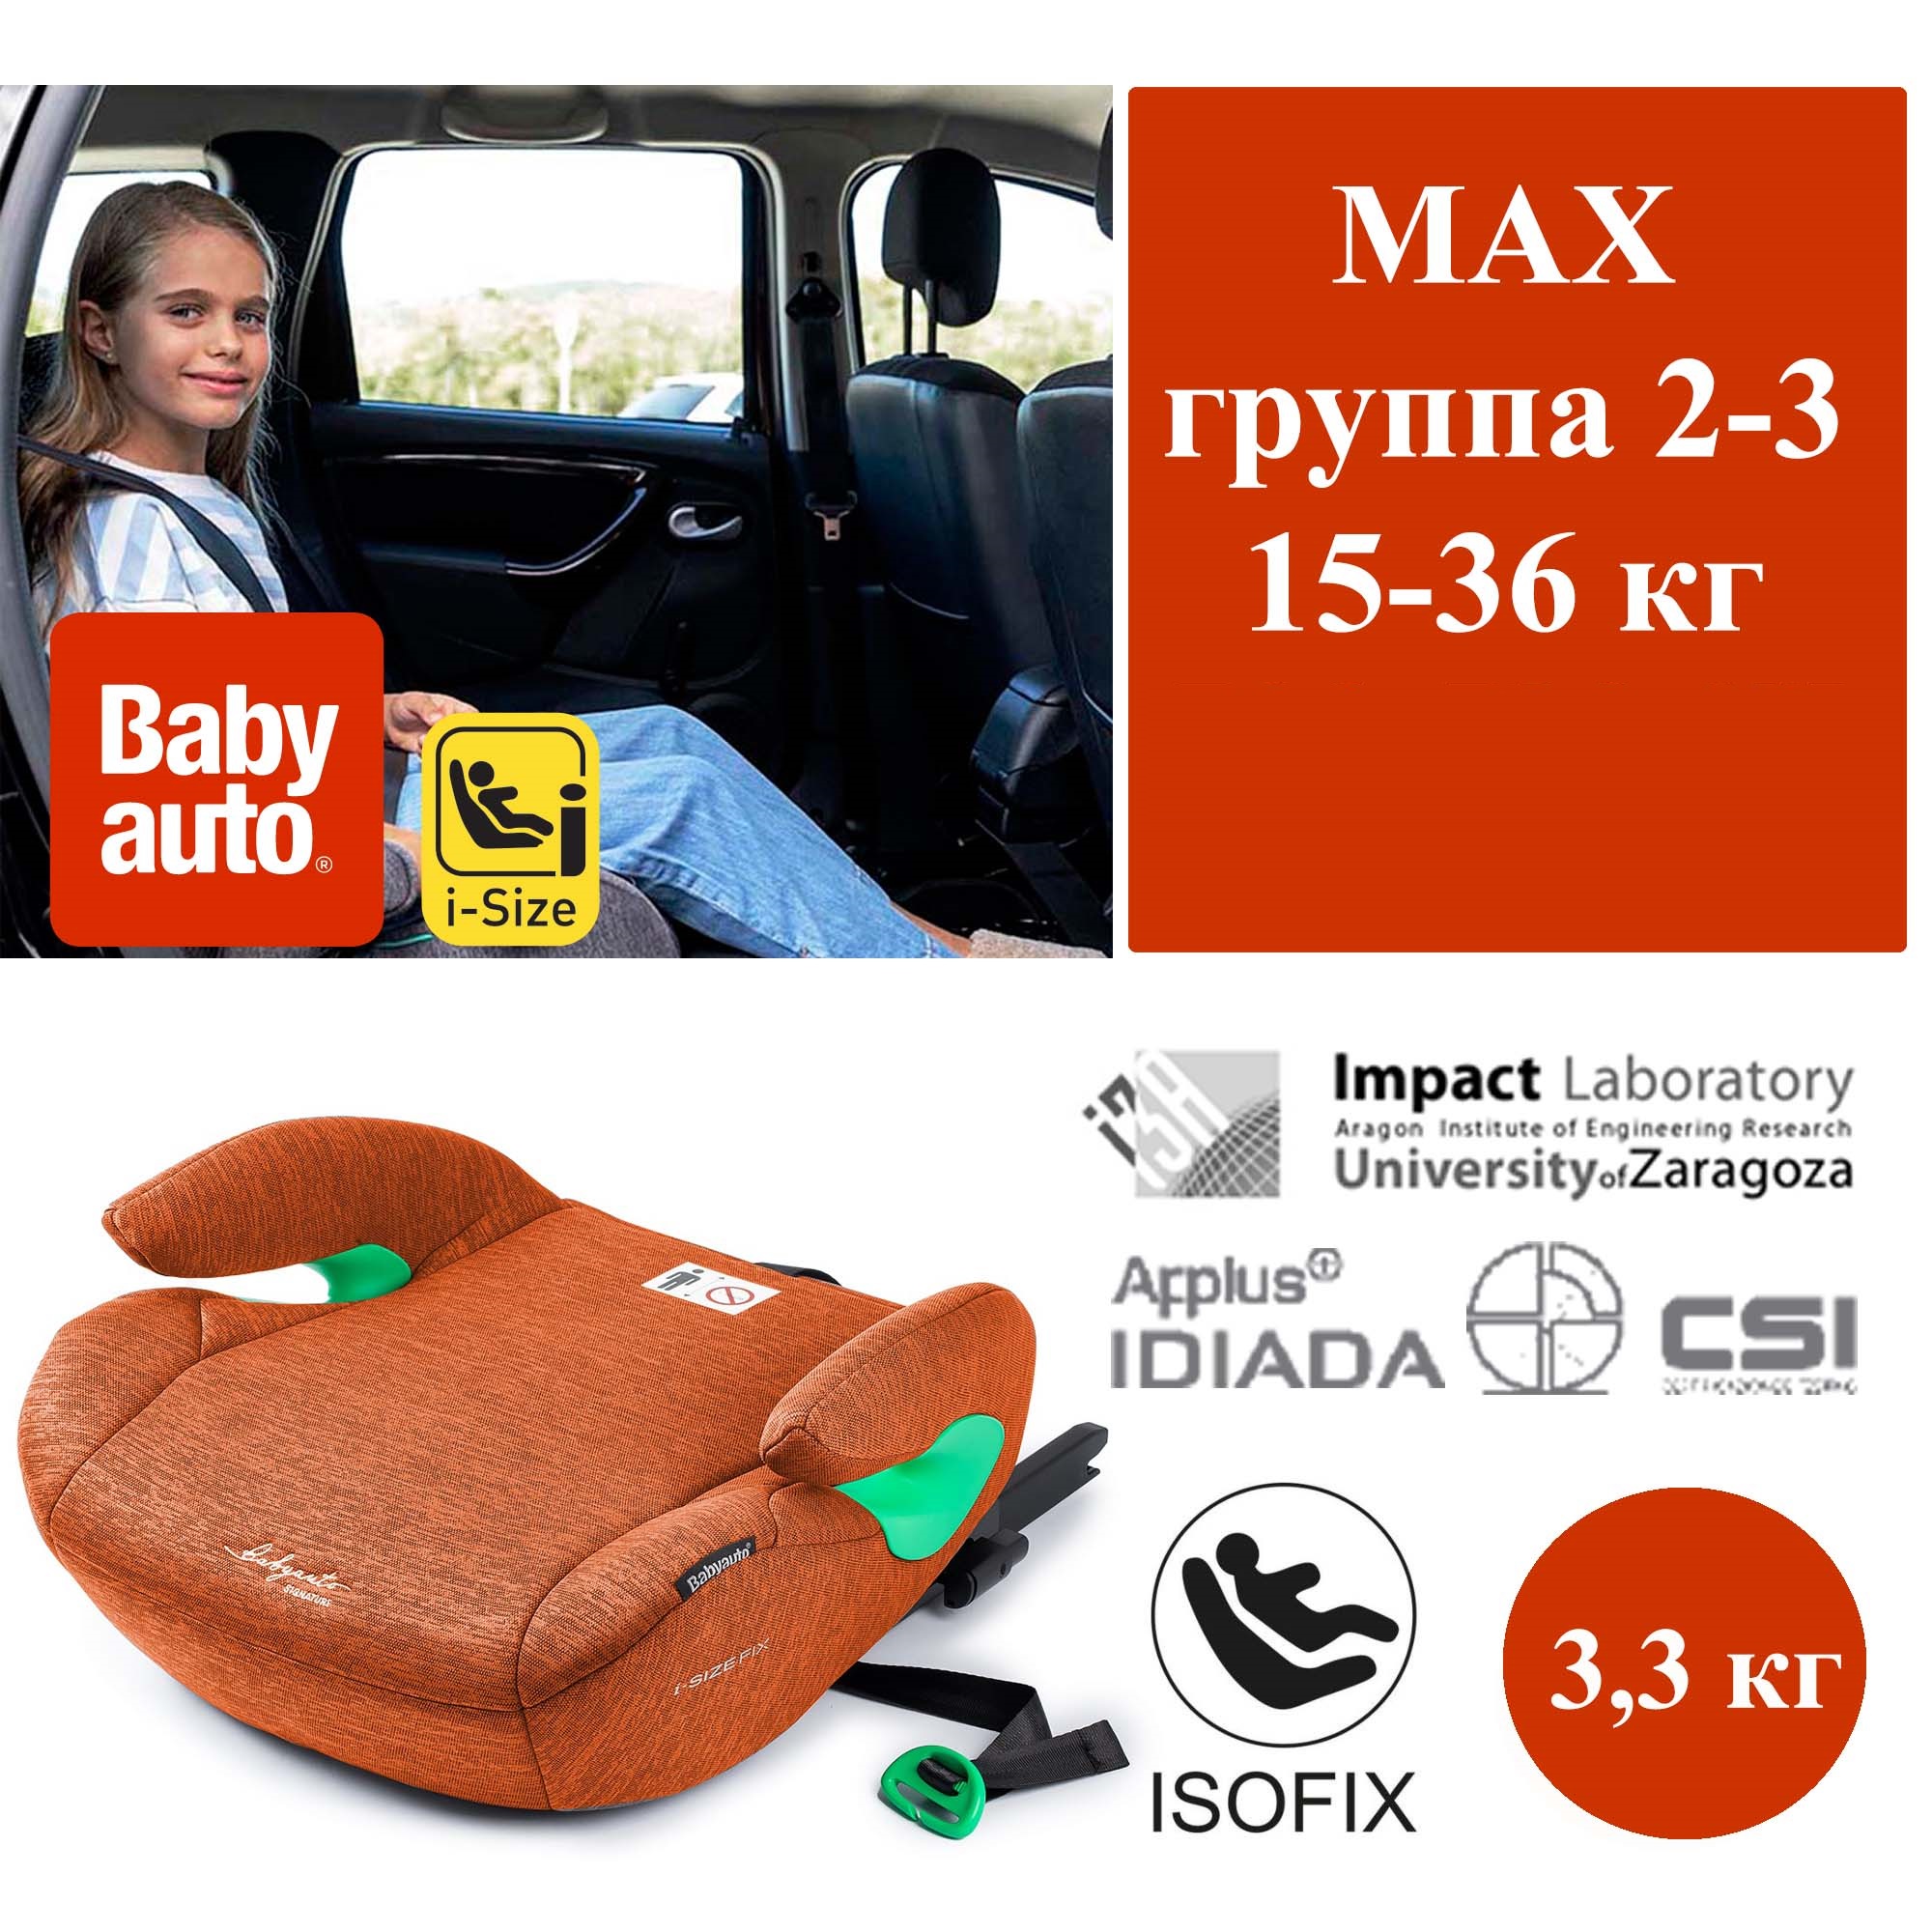 Бустер BabyAuto Max i-Size Brunt Oragne 702208